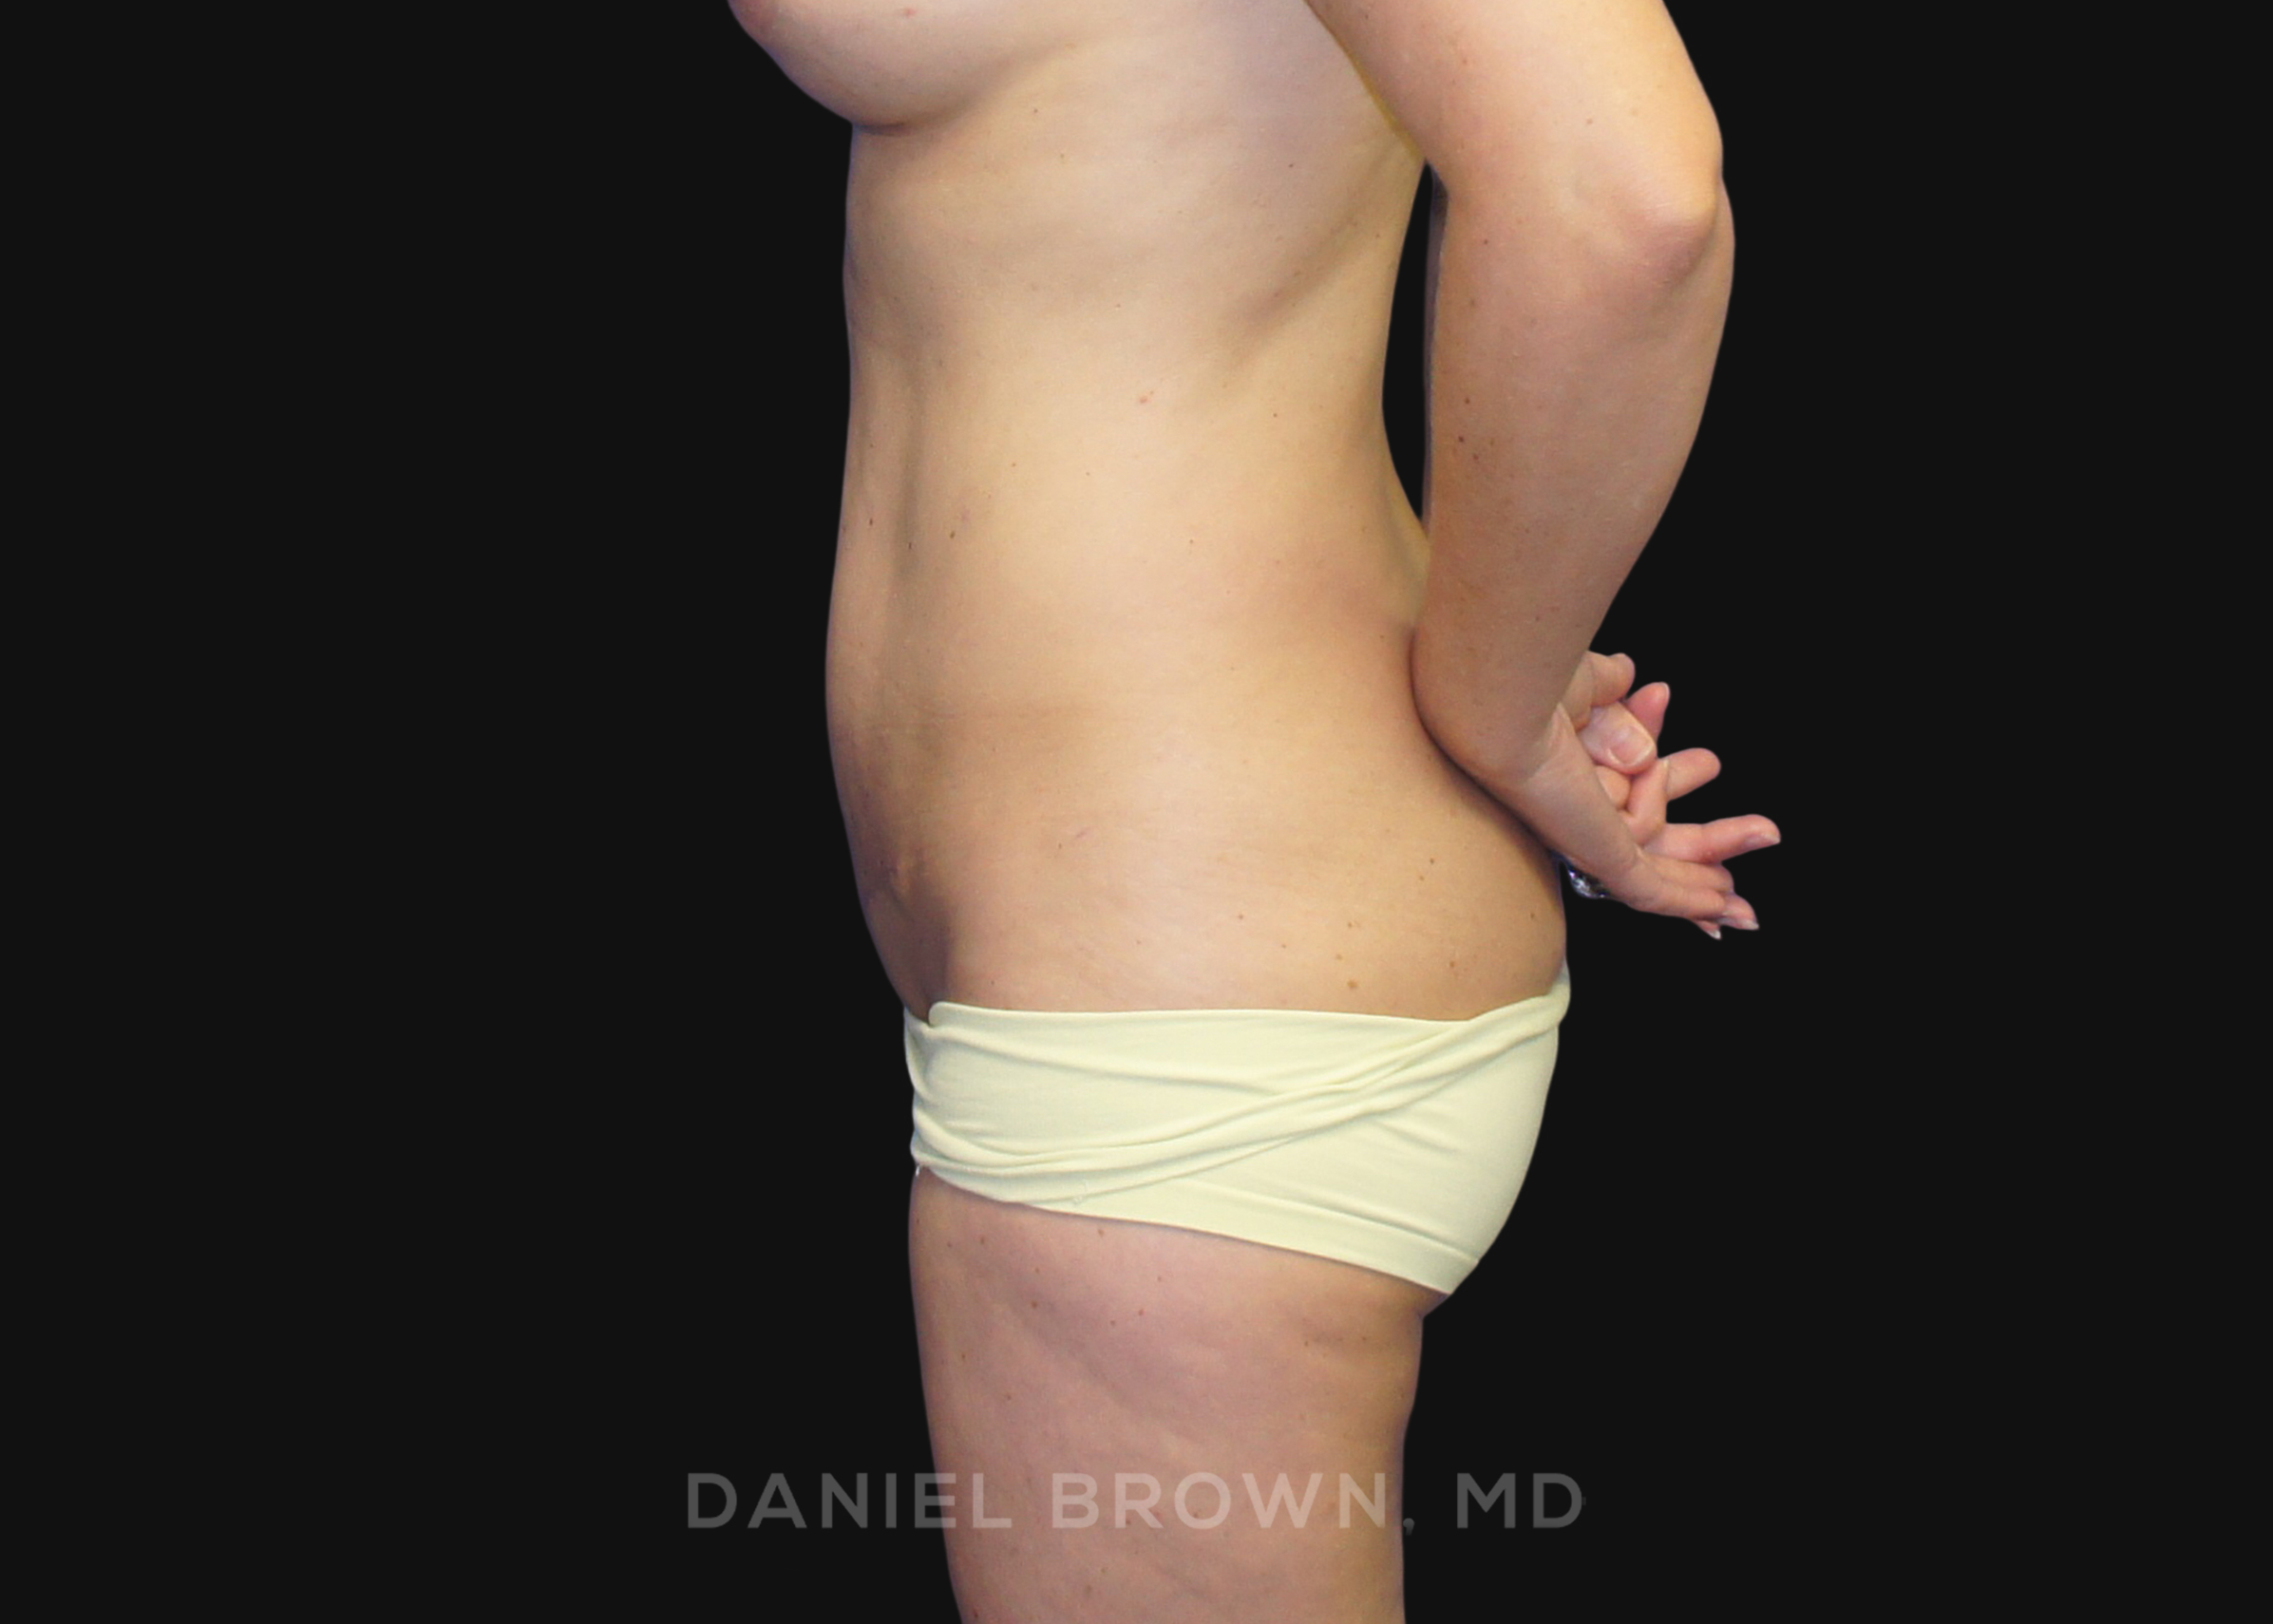 Mini Tummy Tuck Patient Photo - Case 1593 - after view